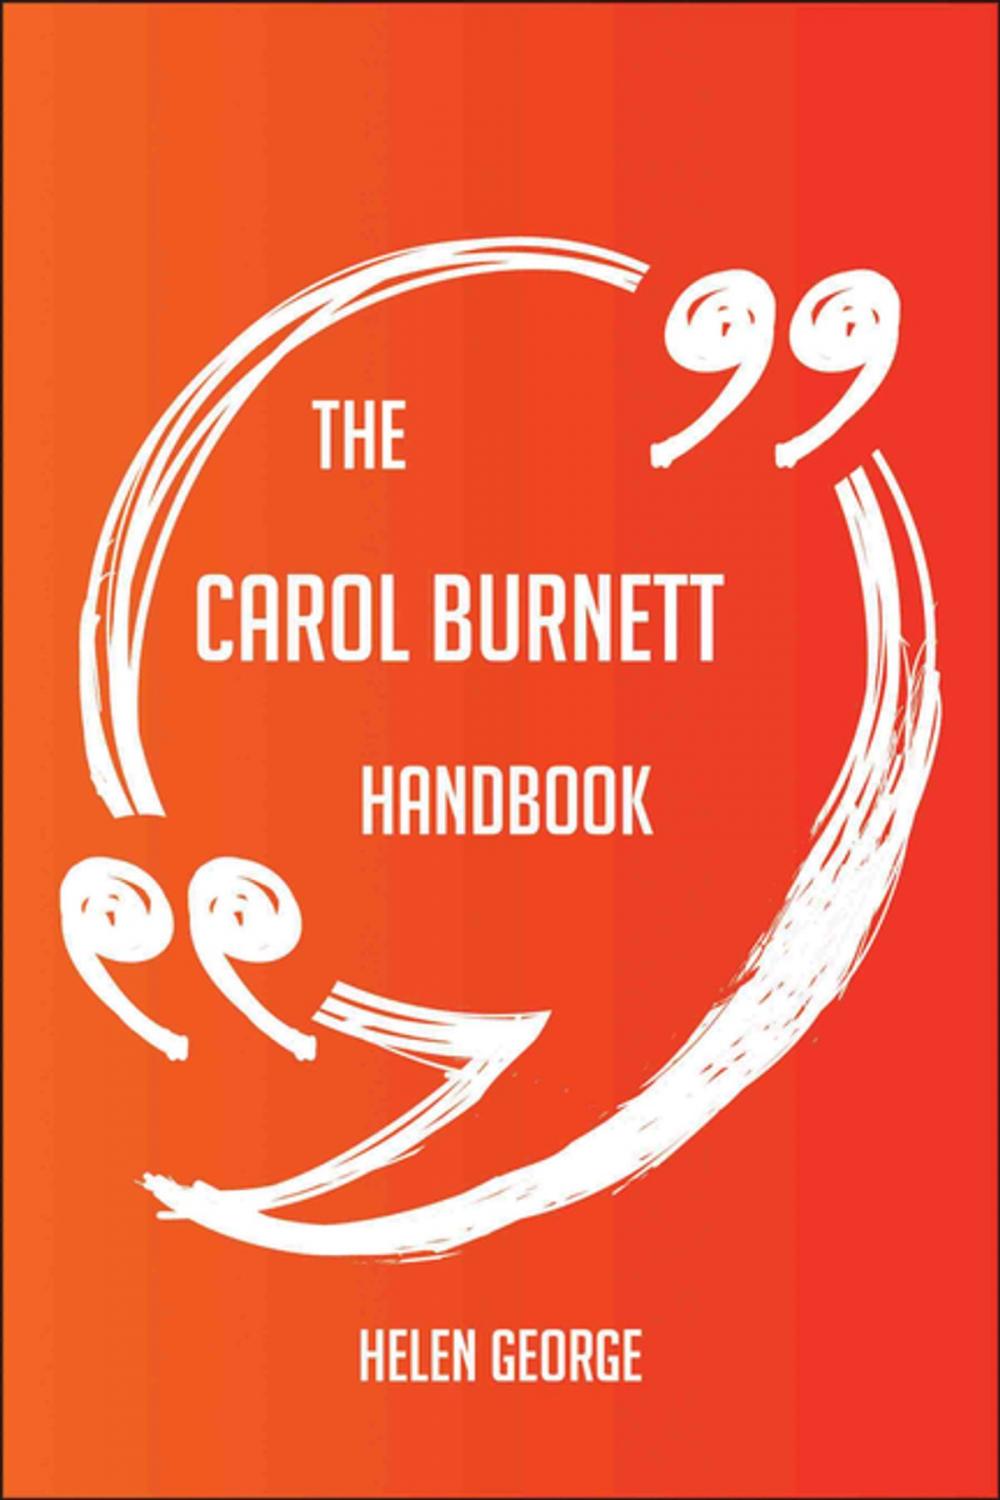 Big bigCover of The Carol Burnett Handbook - Everything You Need To Know About Carol Burnett